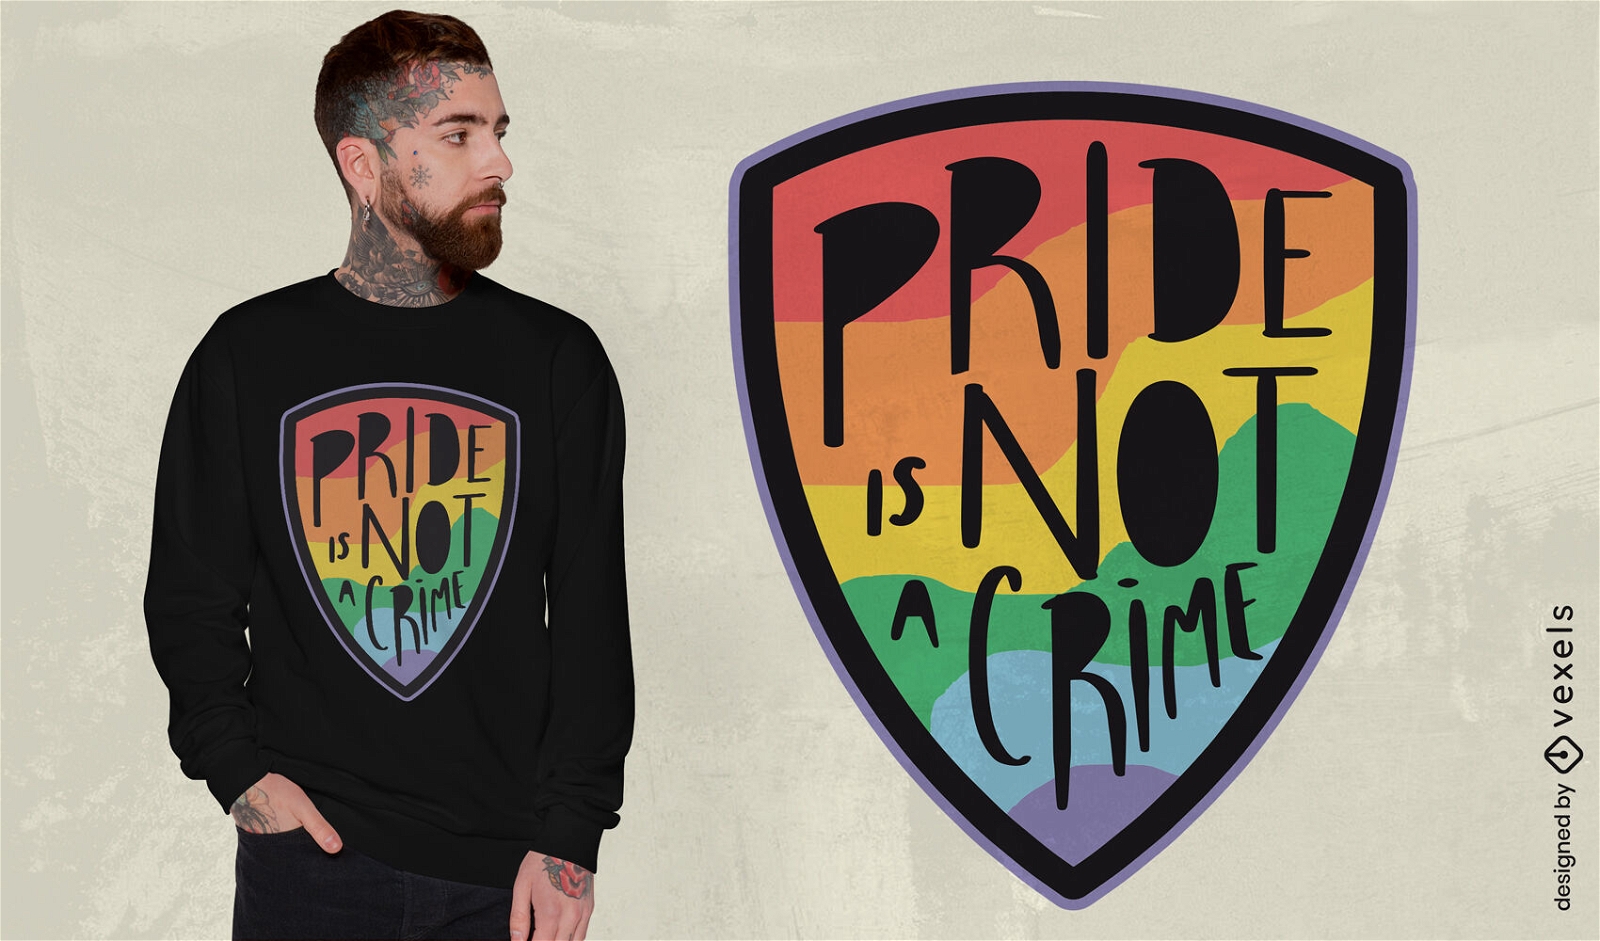 Pride is not a crime badge t-shirt design